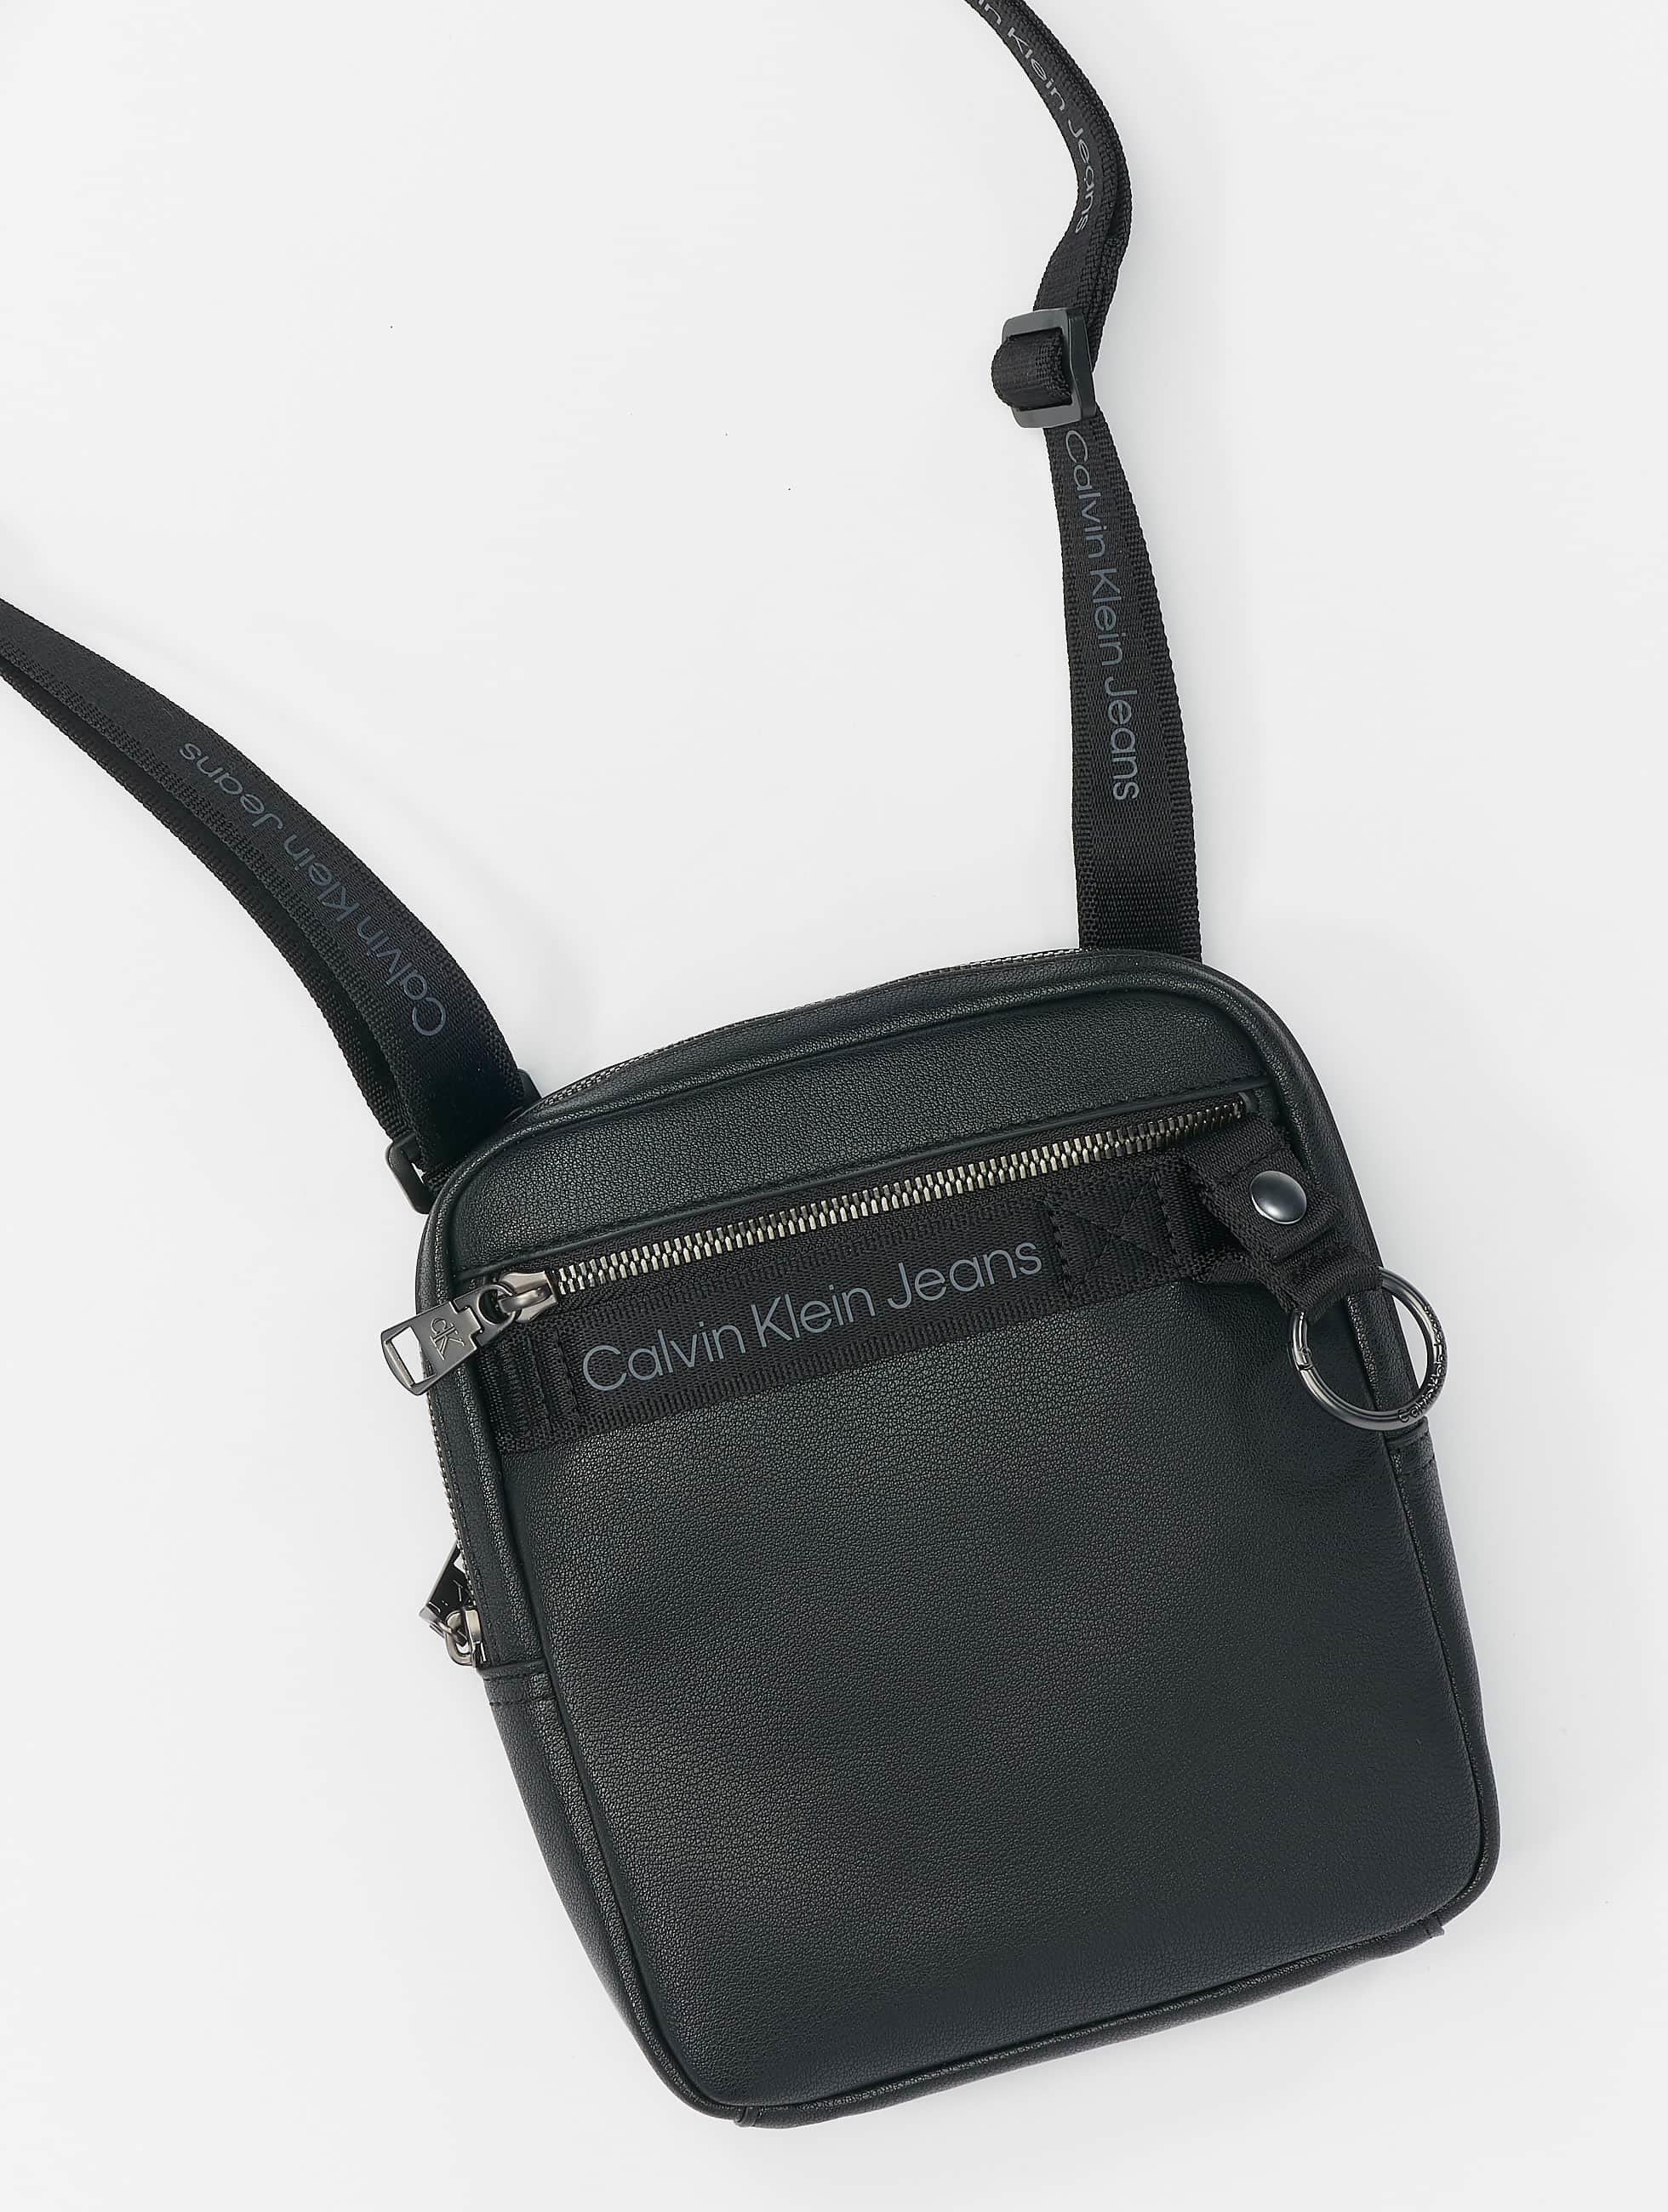 Calvin Klein Accessory / Bag Explorer Reporter in black 971515